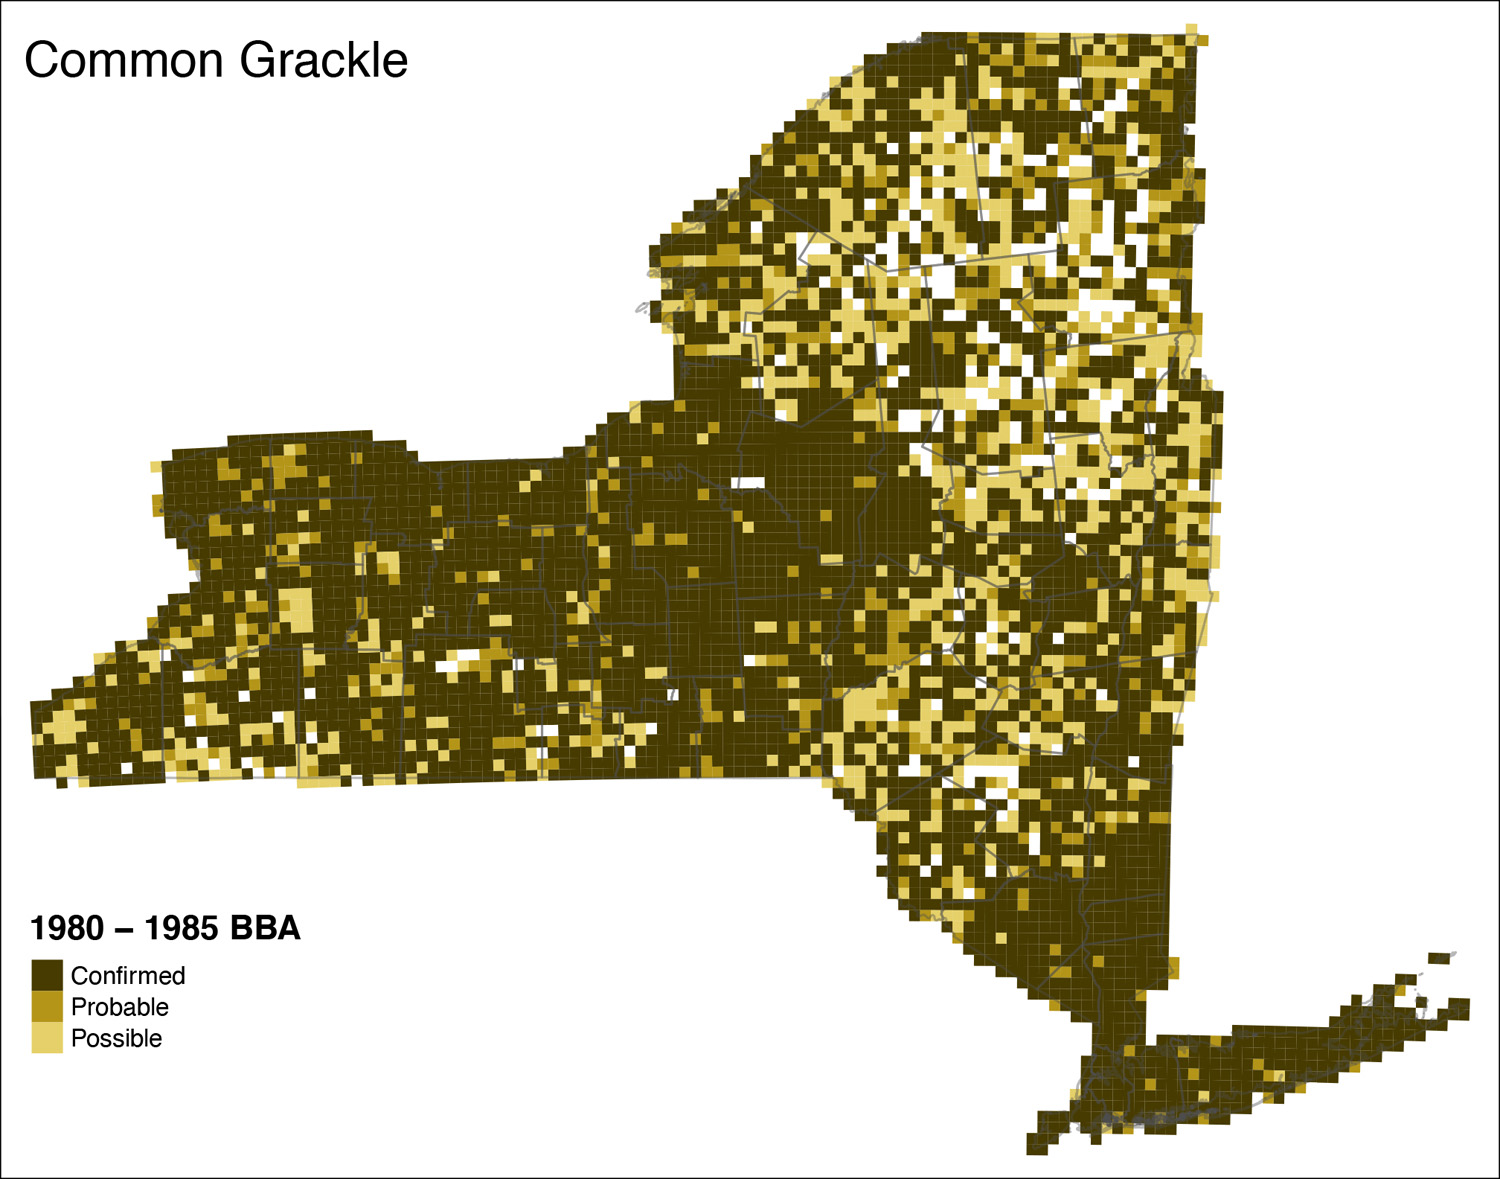 Common Grackle Atlas i